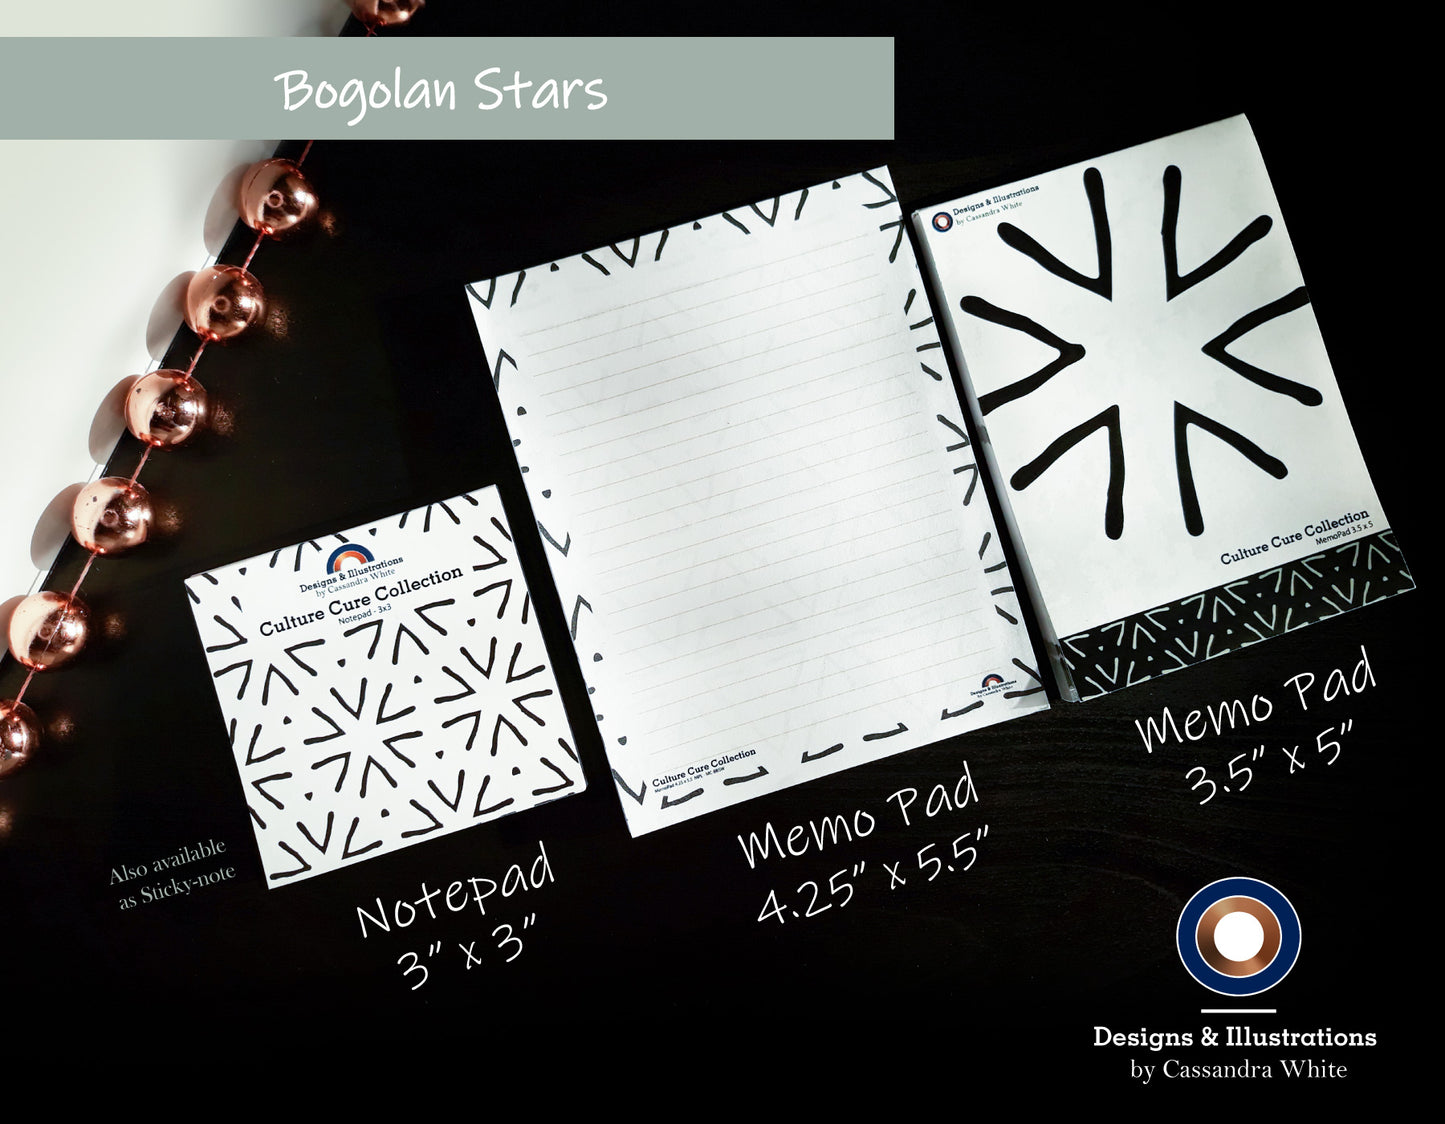 Bogolan Stars - Notepads & Memo Pads